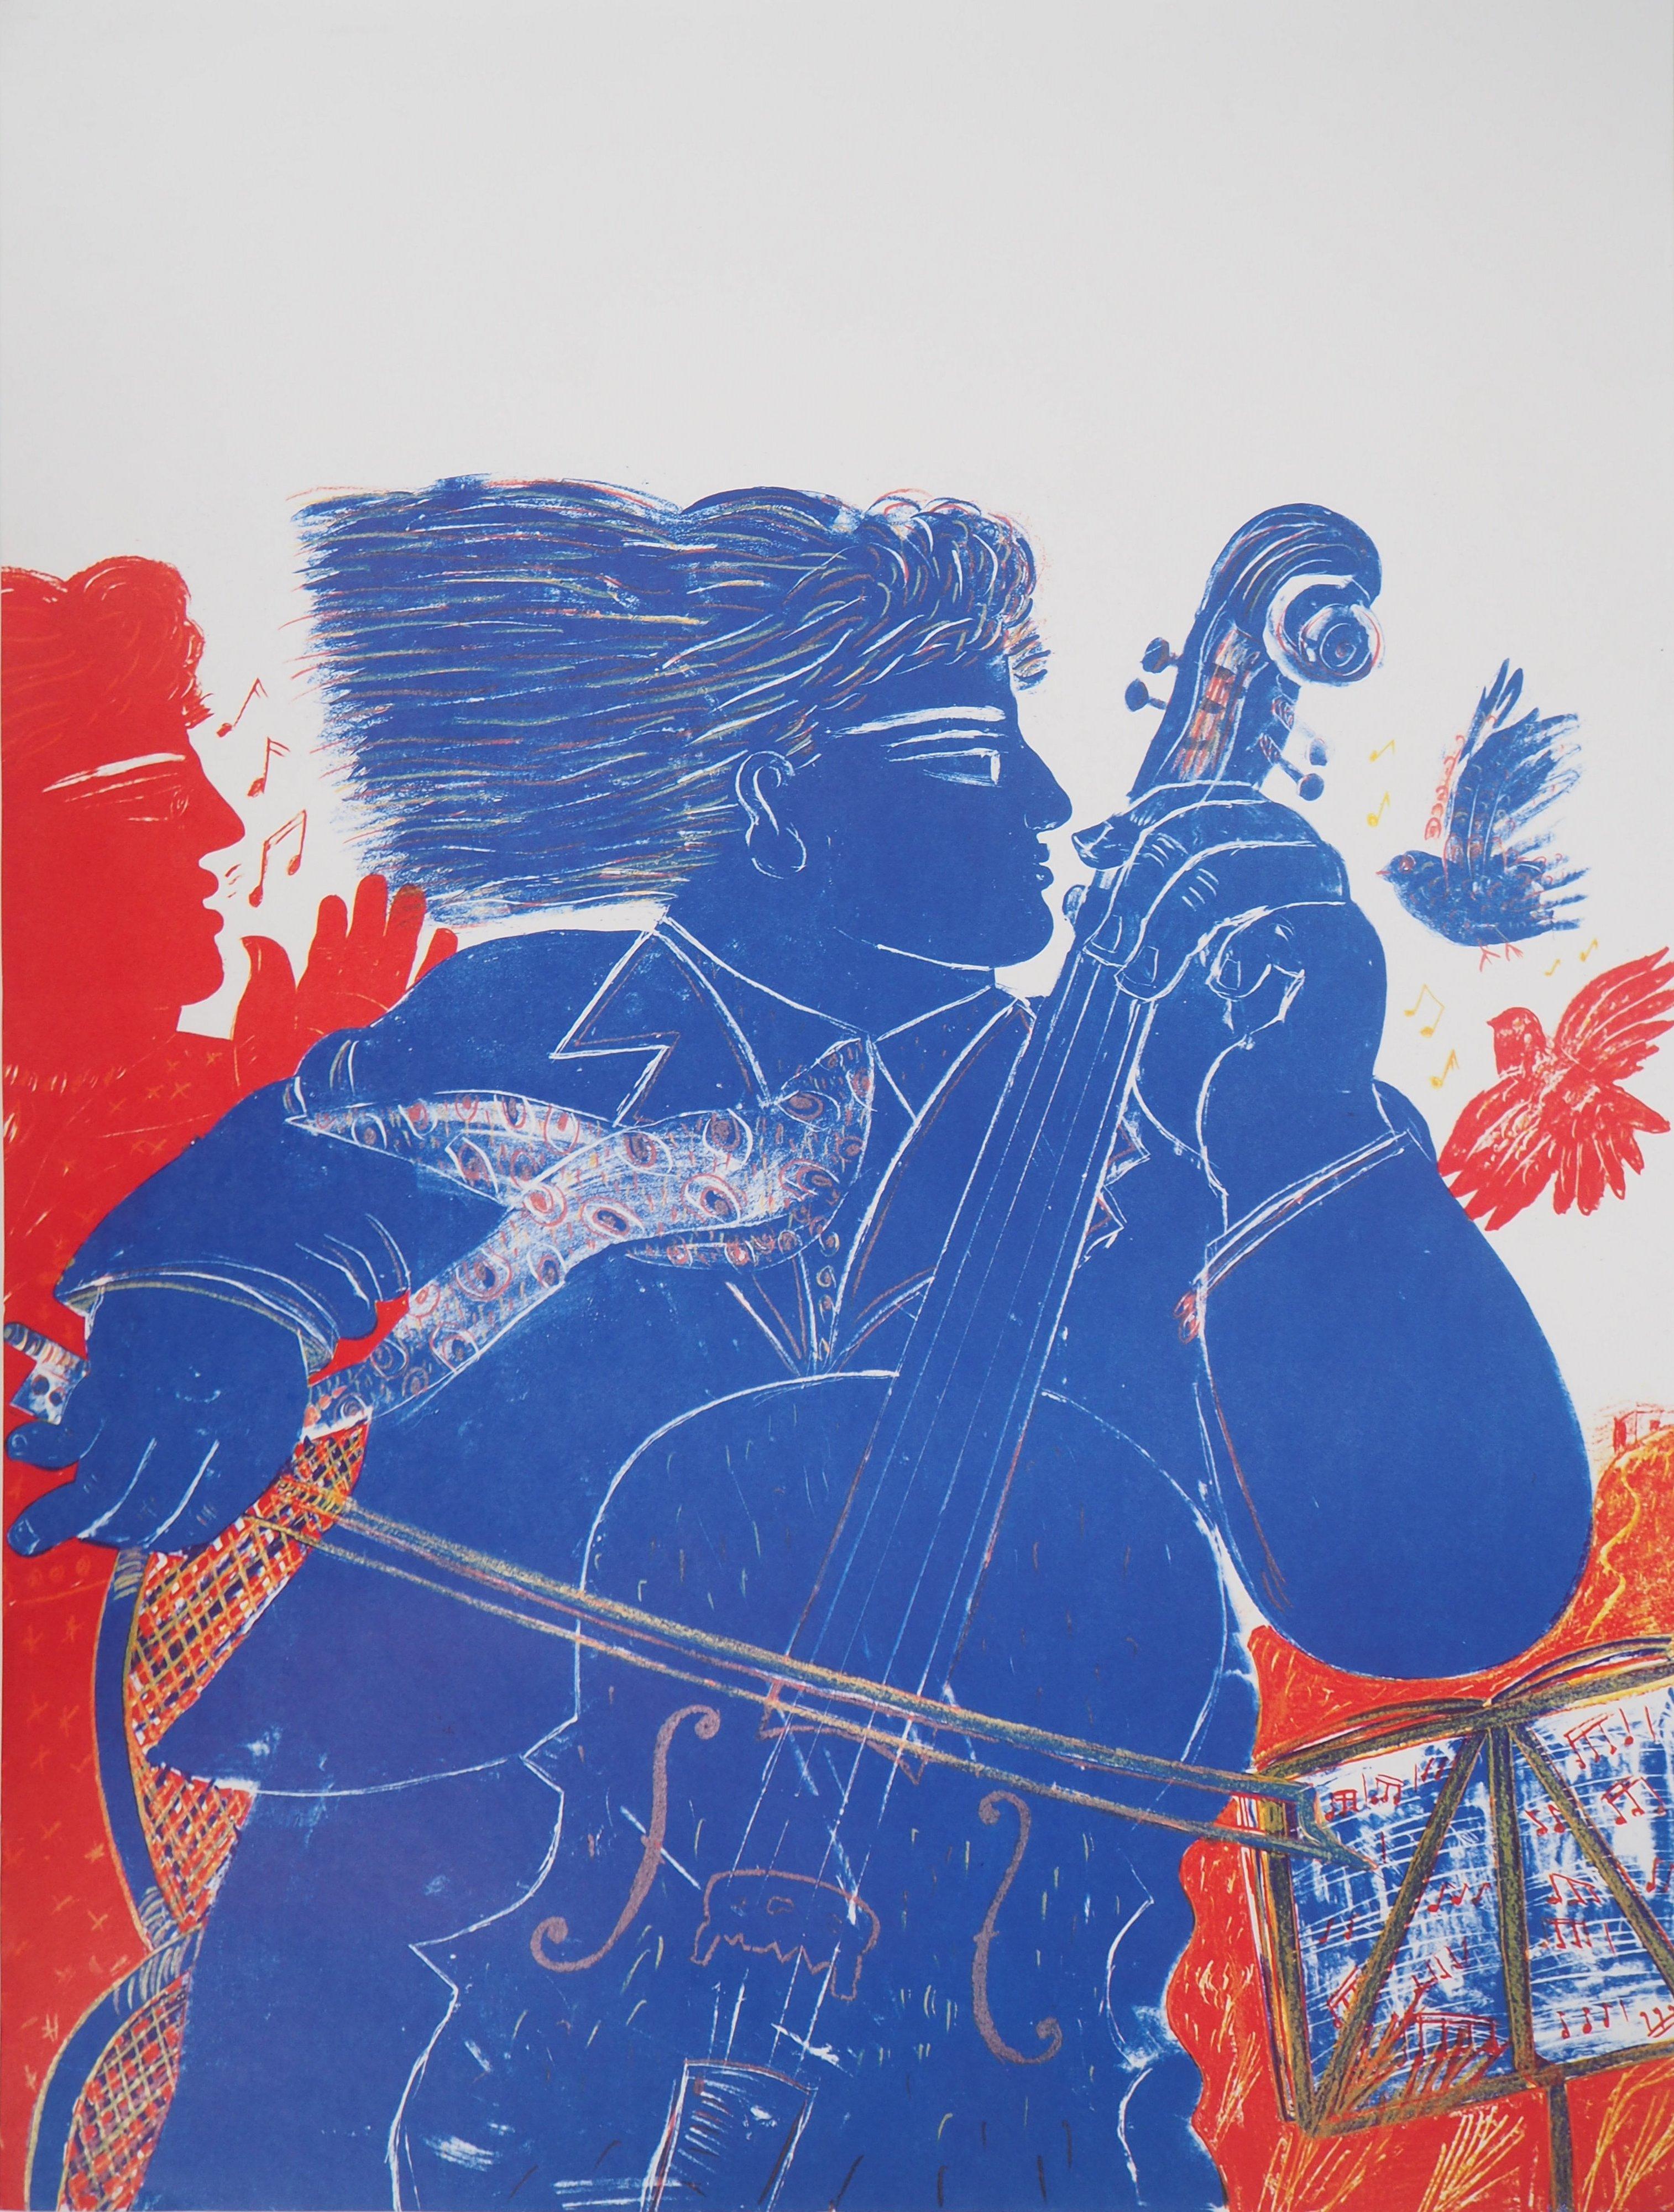 Alekos Fassianos Figurative Print - Greece : Music, Man with Cello, Singer and Birds - Original lithograph